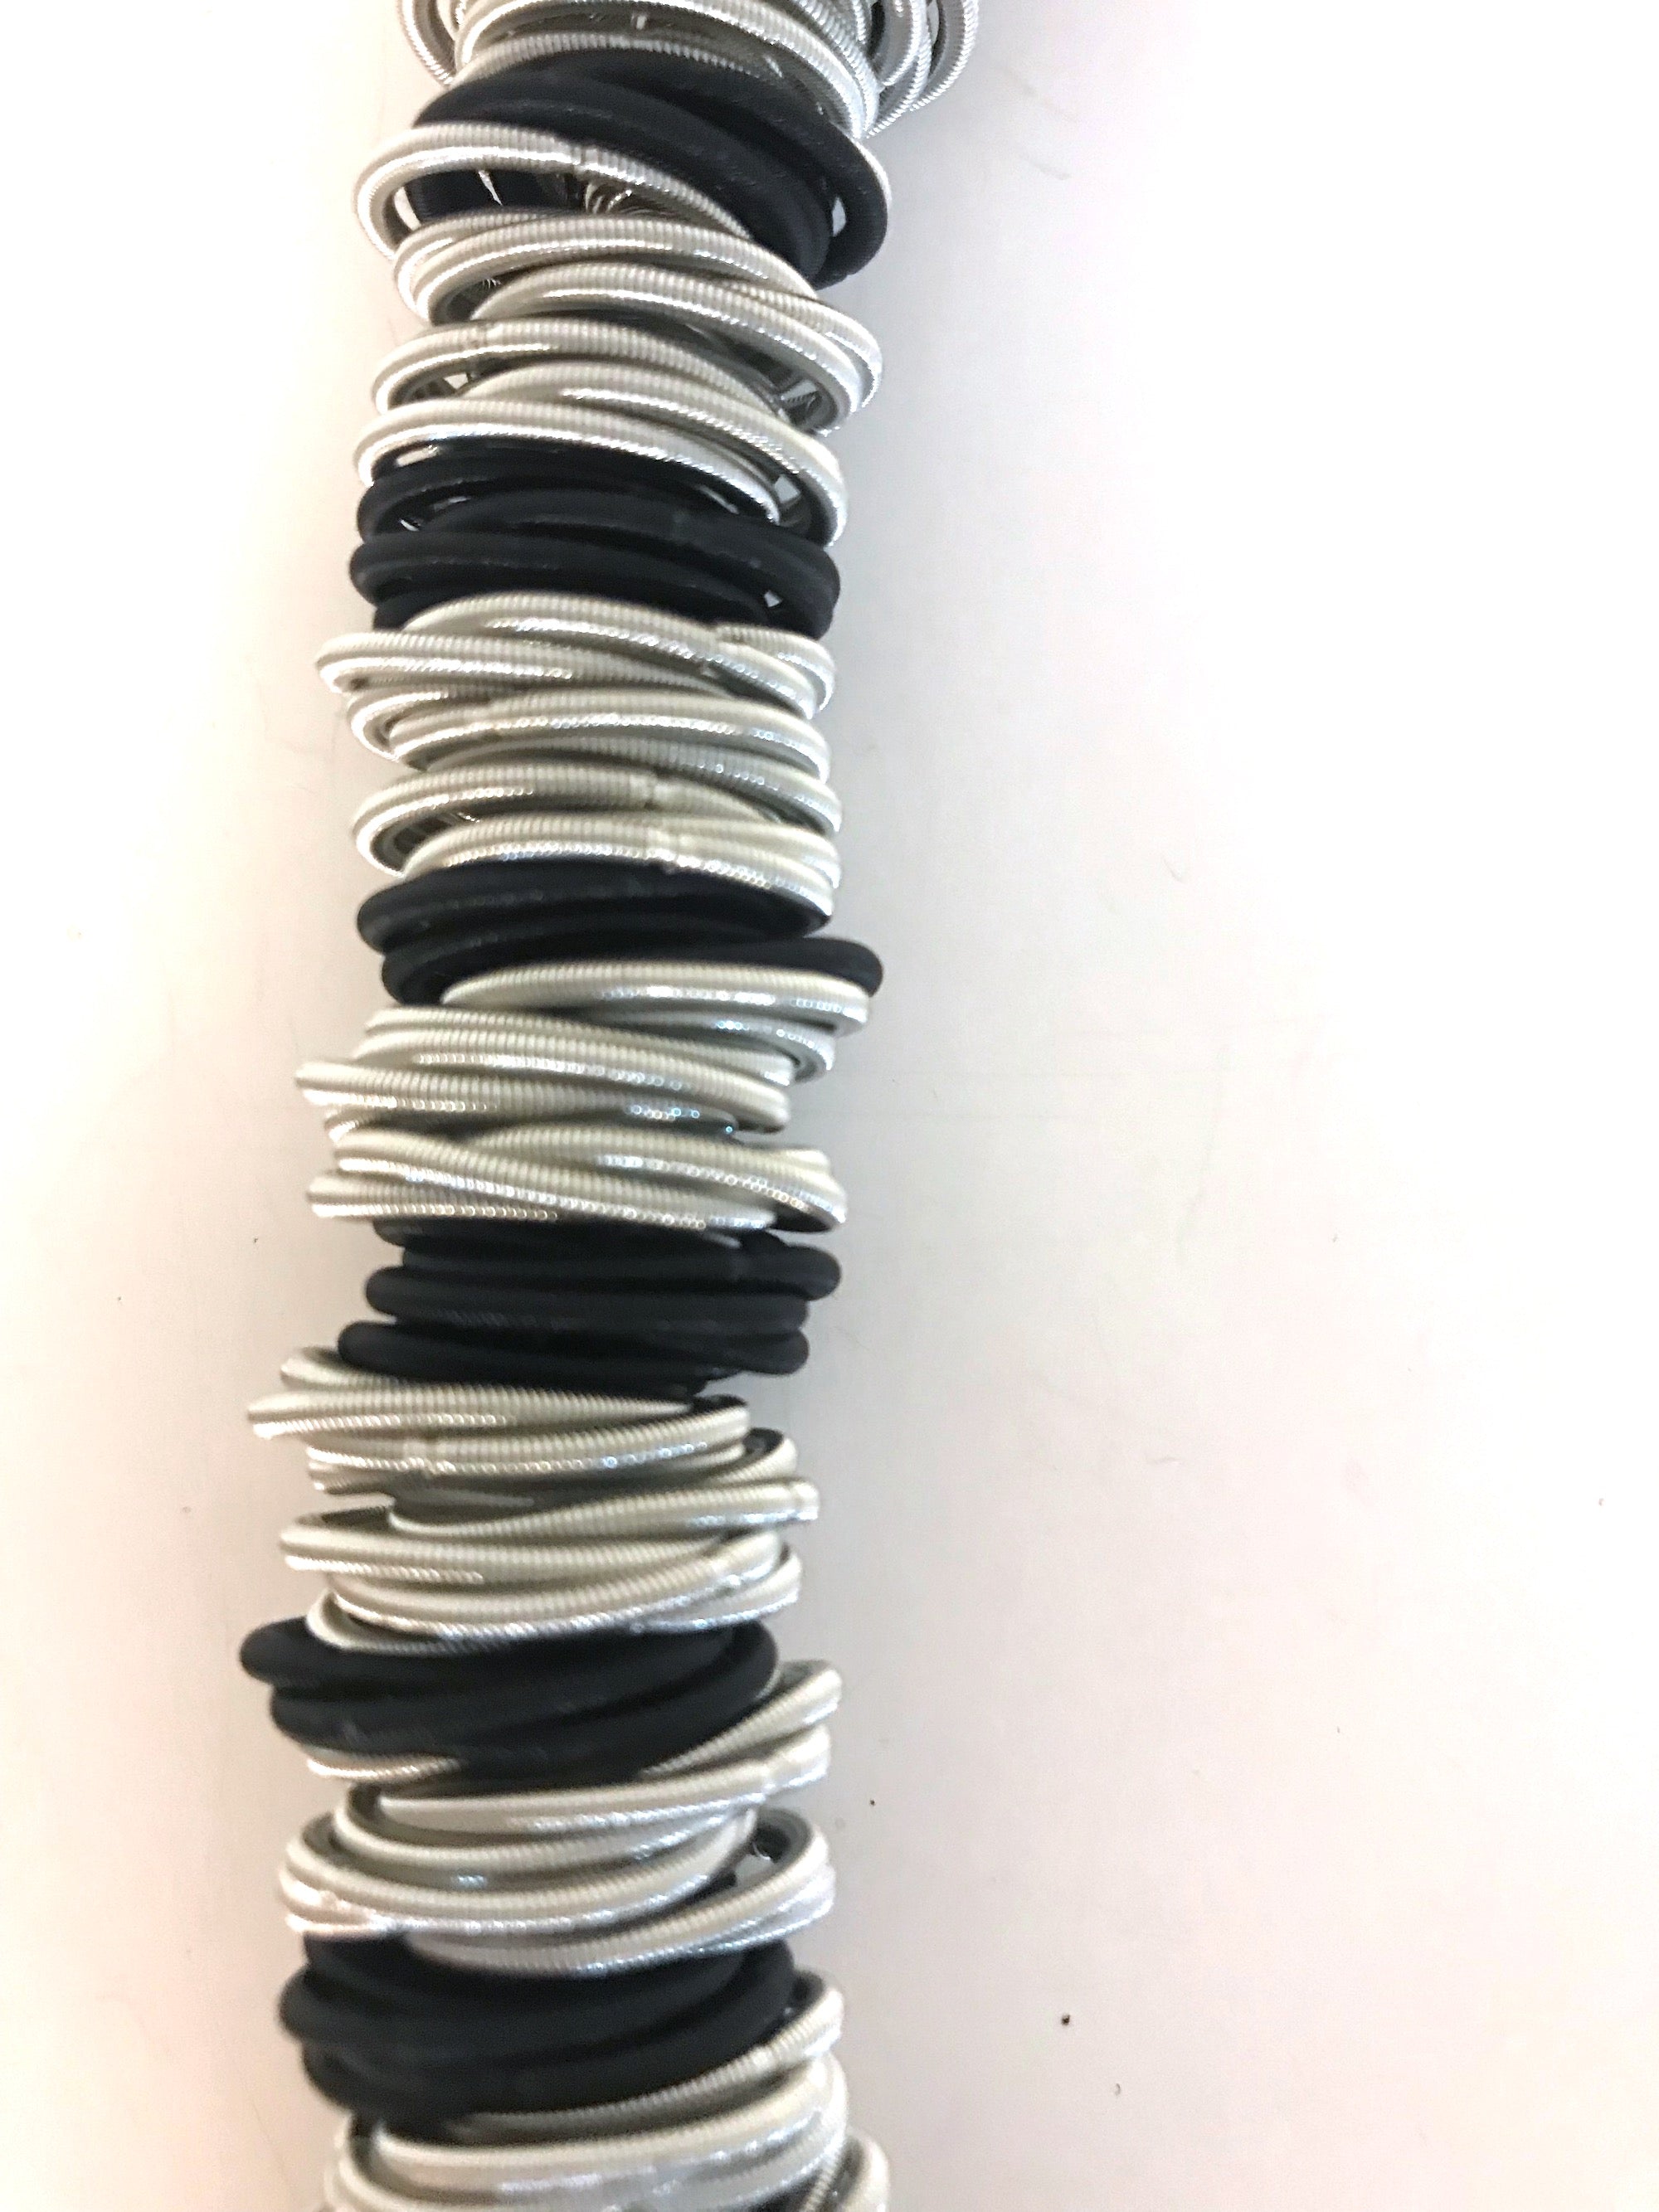 Silver & Black Spring-Wire Necklace